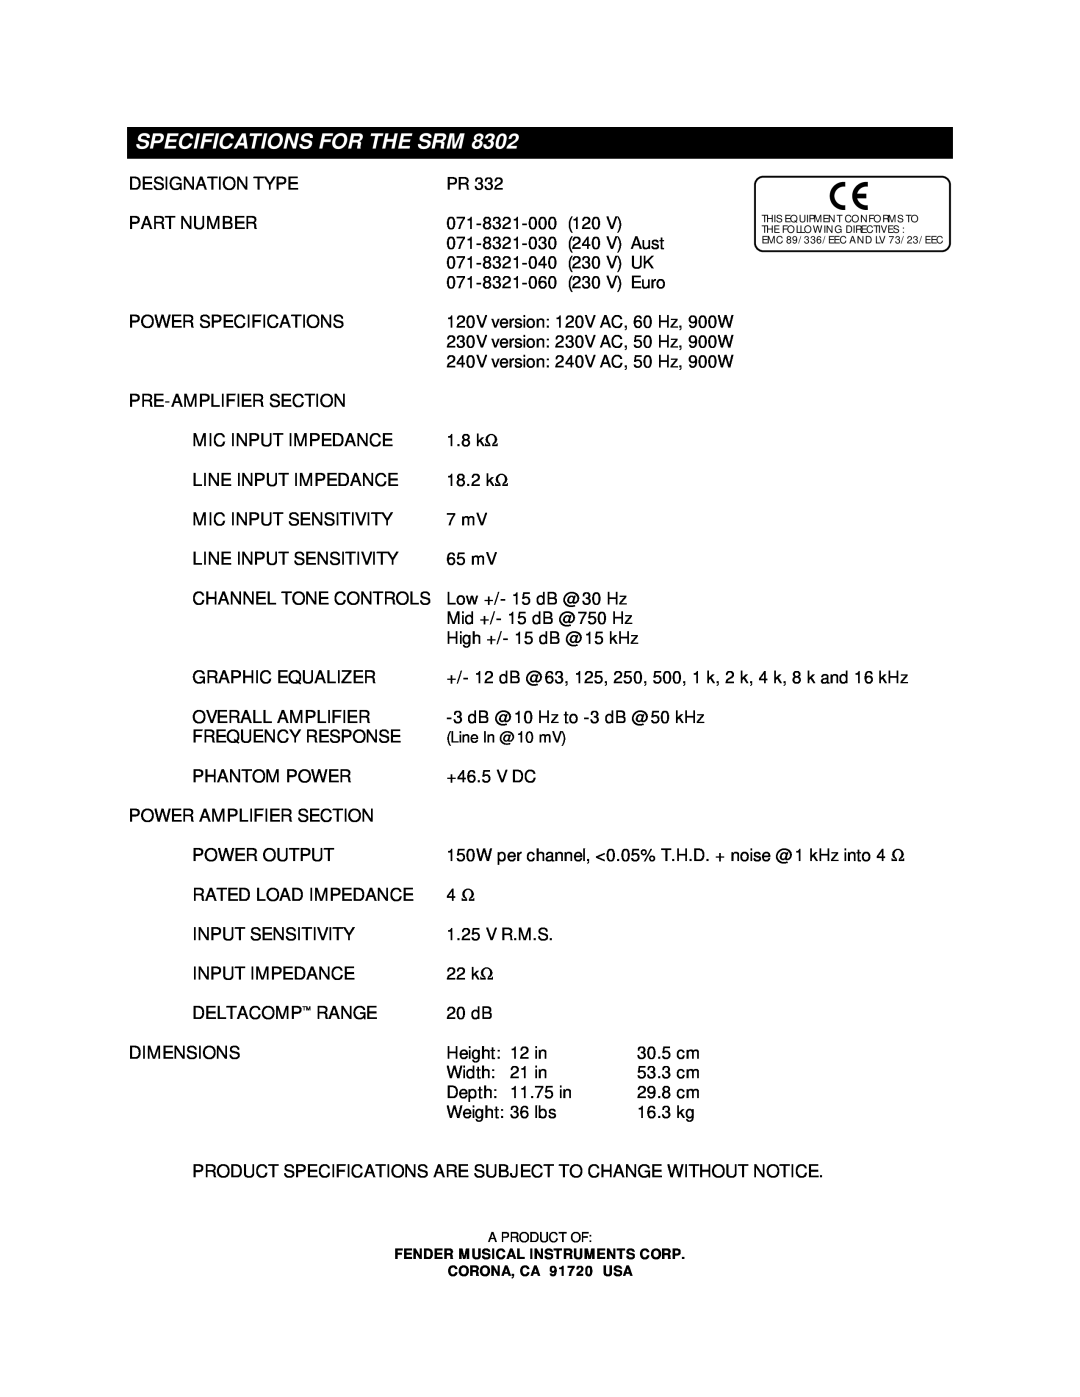 Fender SRM 8302, SRM 6302 manual Specifications For The Srm, Designation Type 